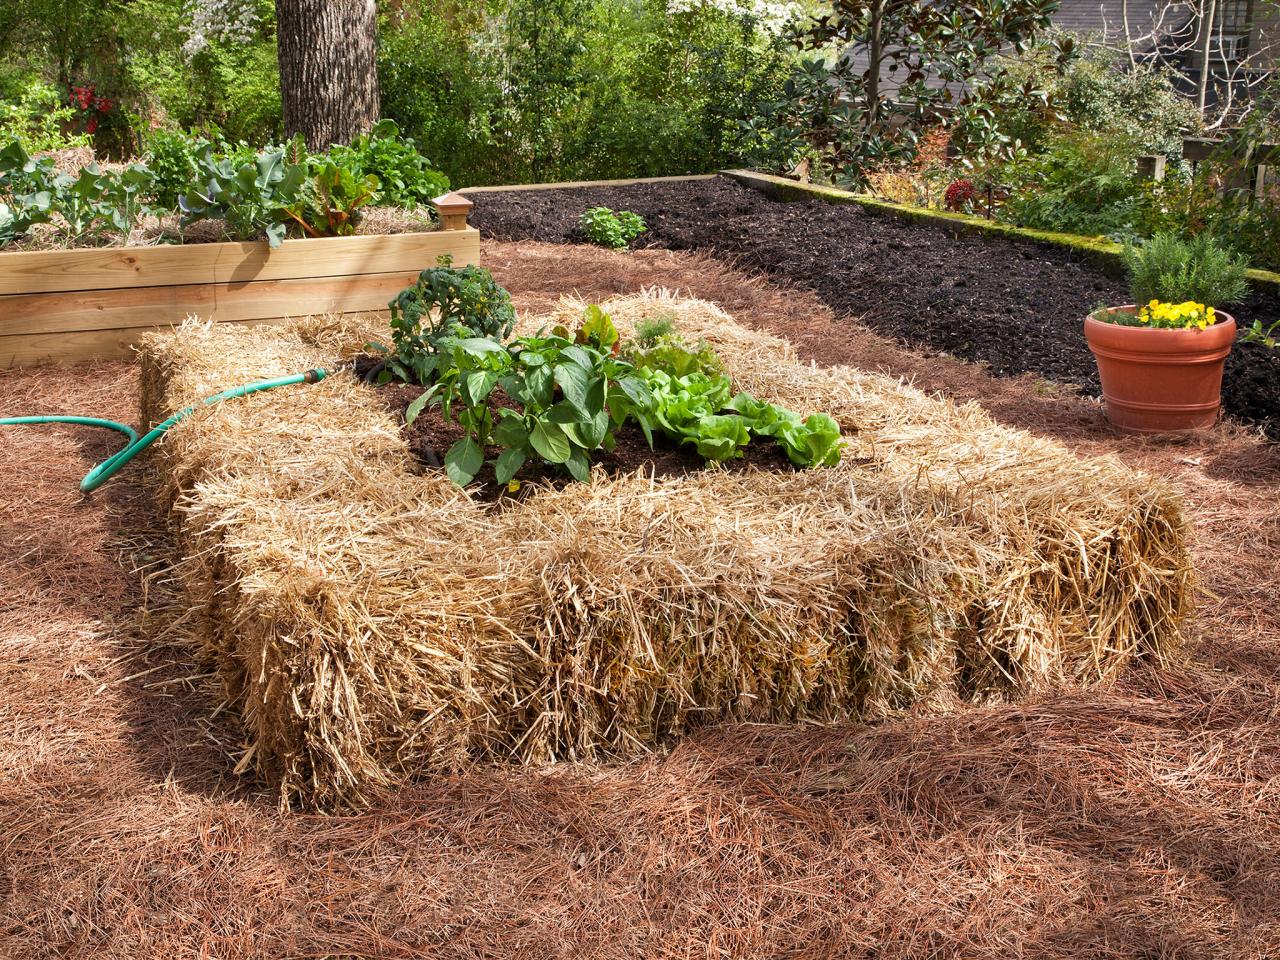 The Basics of Organic Gardening In Raised Garden Beds